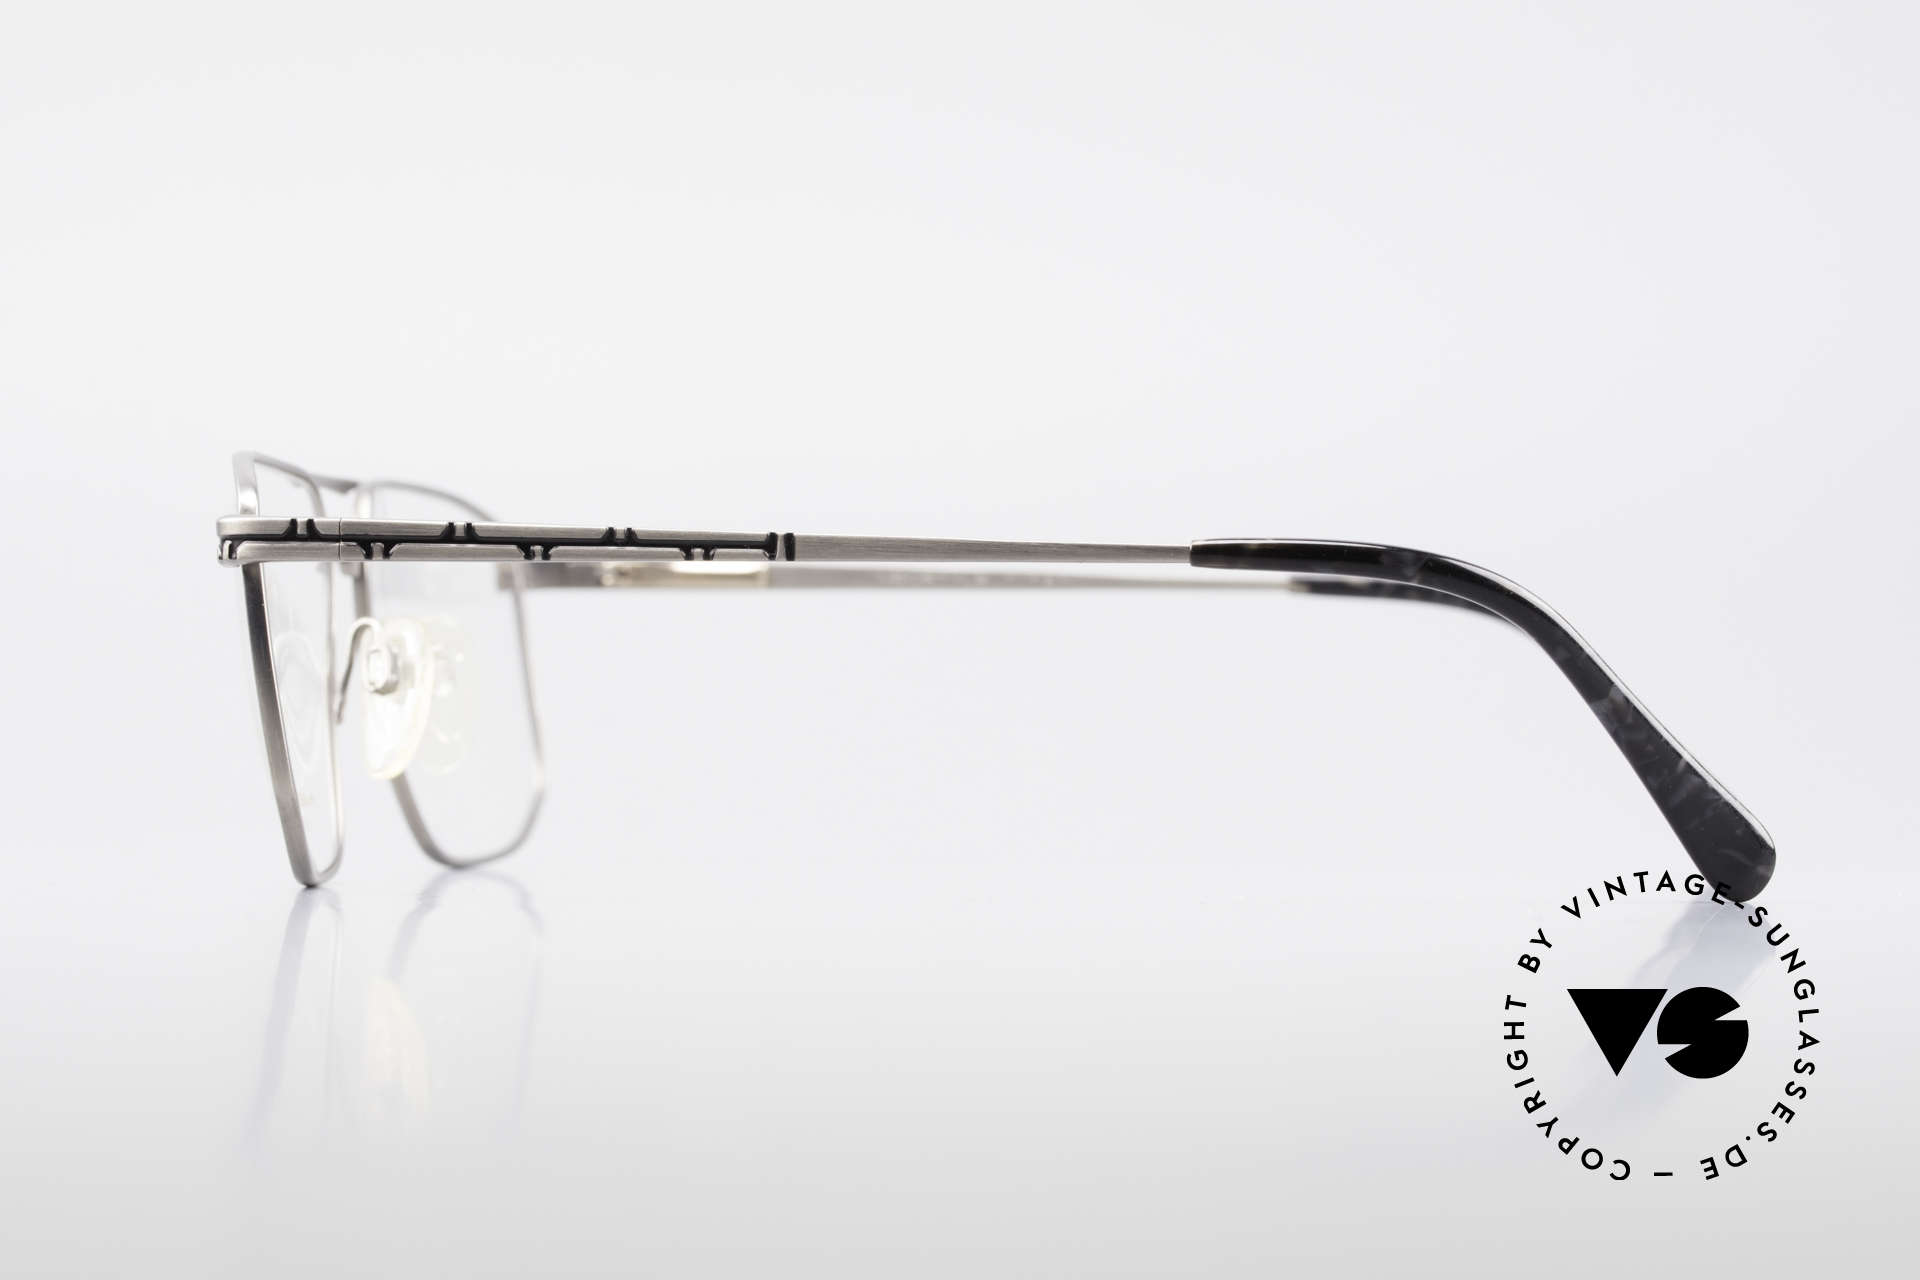 Neostyle Dynasty 362 XL Titanium Eyeglasses Men, the frame fits lenses of any kind (optical / sun), Made for Men